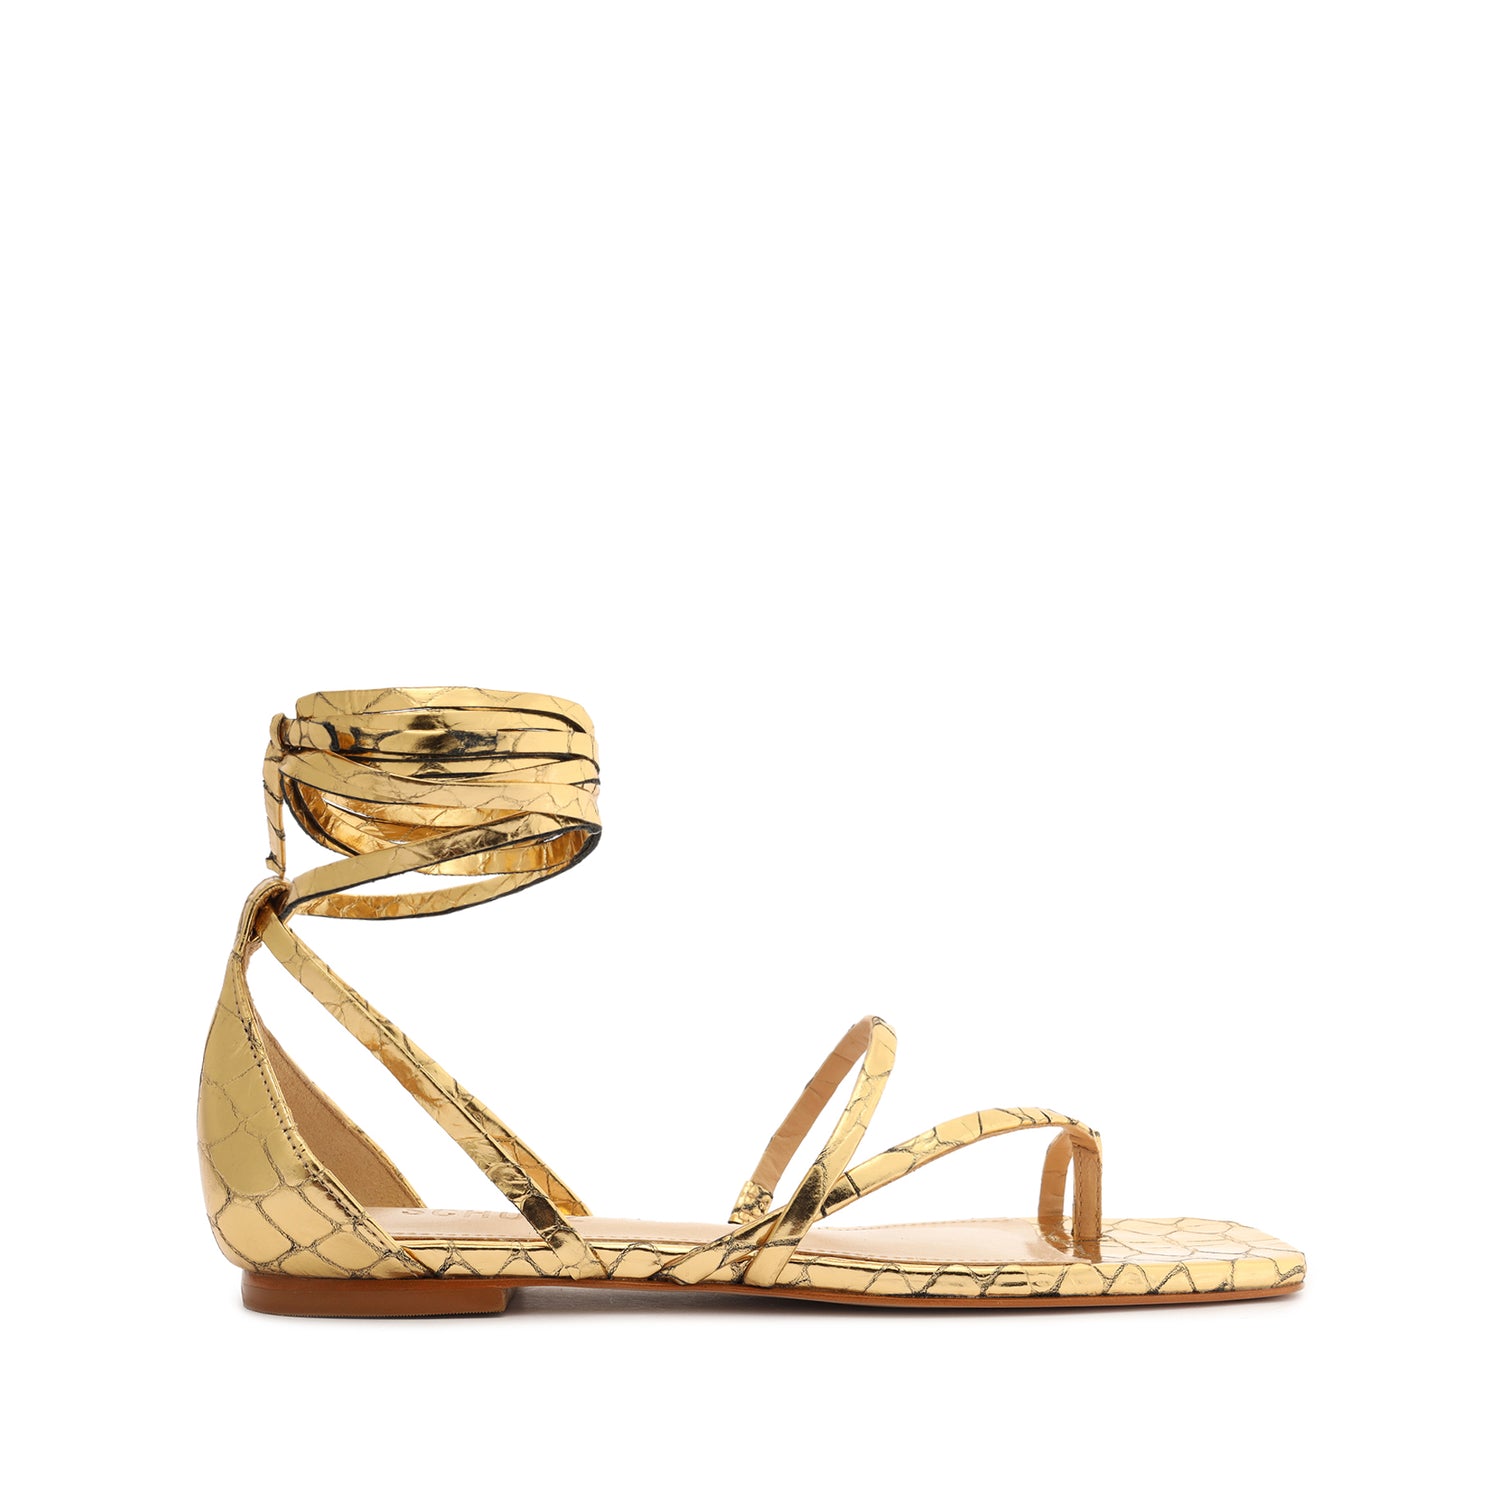 Lily Metallic Flat Sandal Flats Sale 5 Gold Metallic Crocodile-Embossed Leather - Schutz Shoes